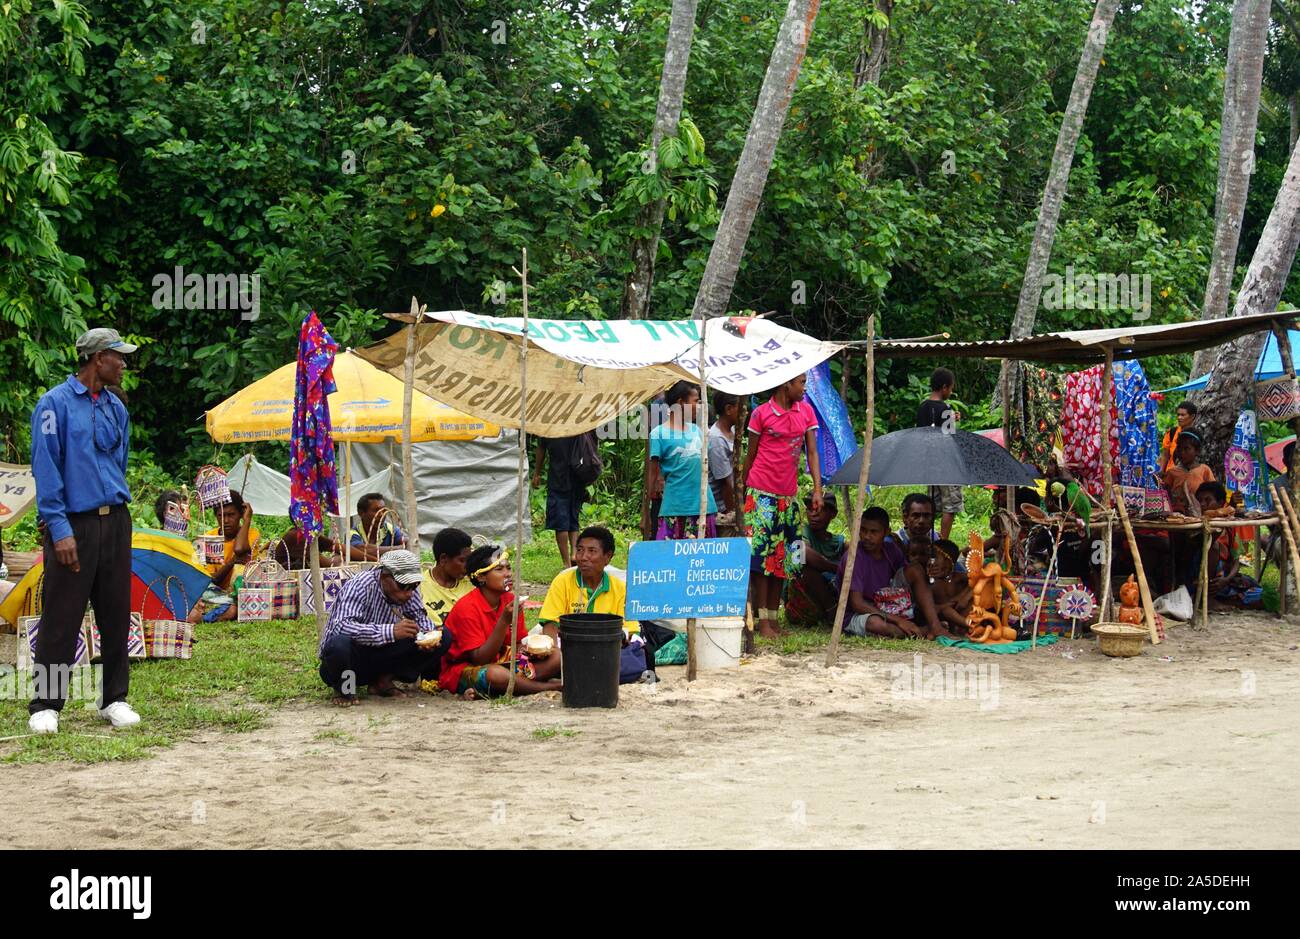 Makeshift Market Stall with Donation Buckets greeting Visitors on Arrival at Kiriwina Island Stock Photo